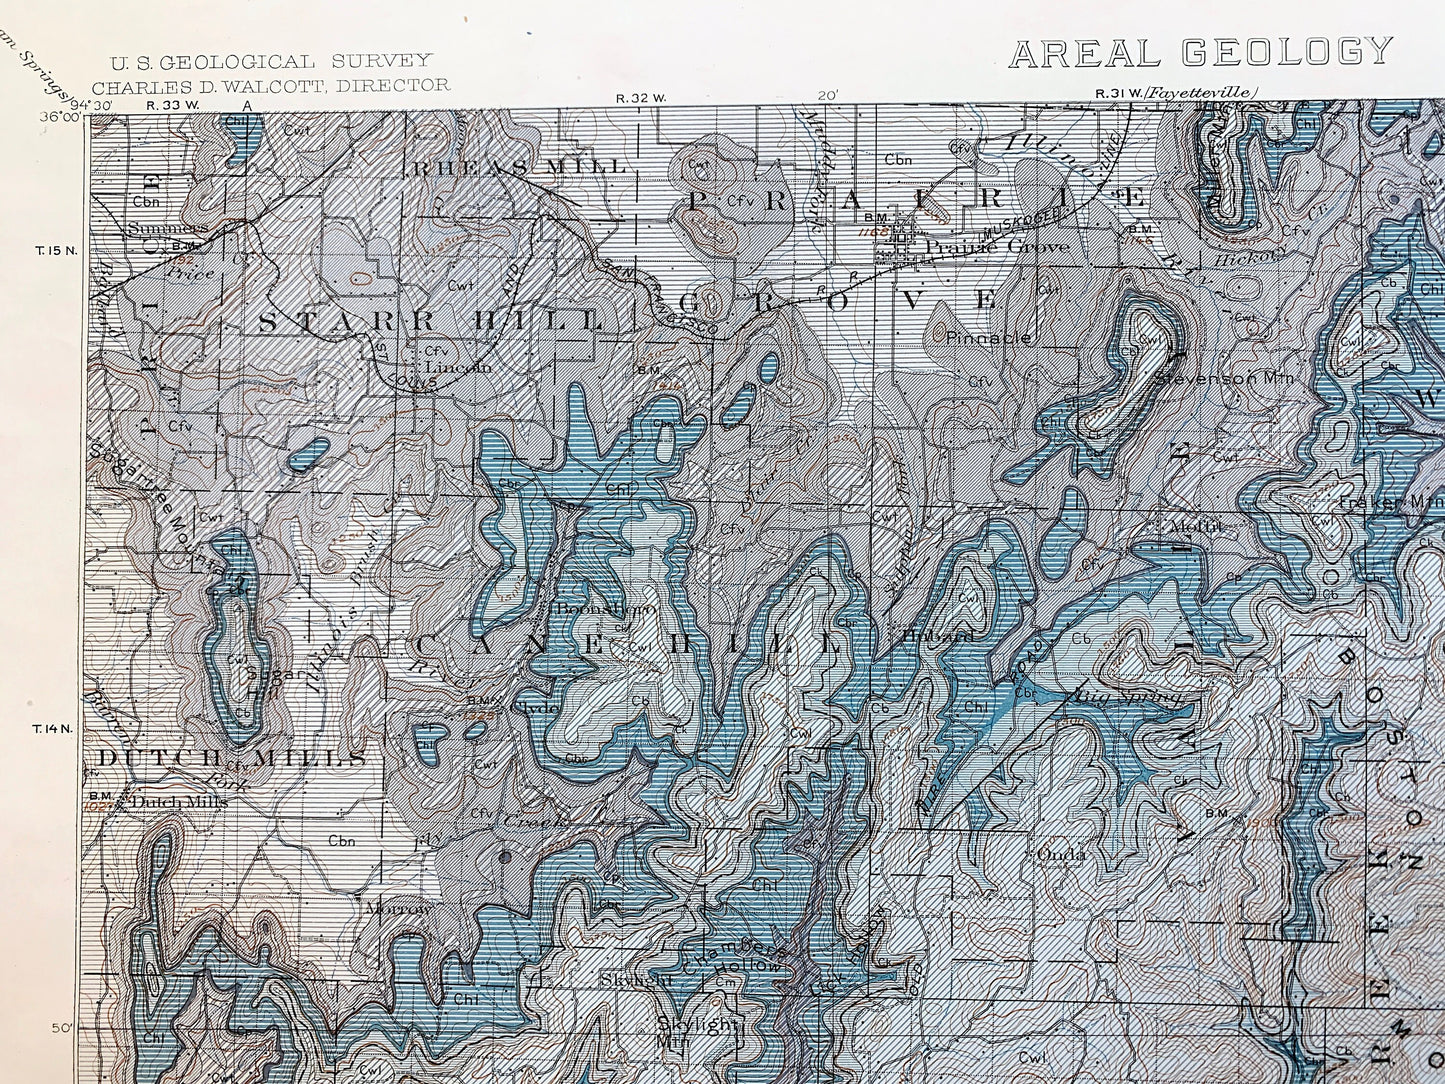 Antique Winslow, Arkansas 1907 US Geological Survey Topographic Map –  Washington, Crawford County, White River, Boston Mountains, Jasper AR